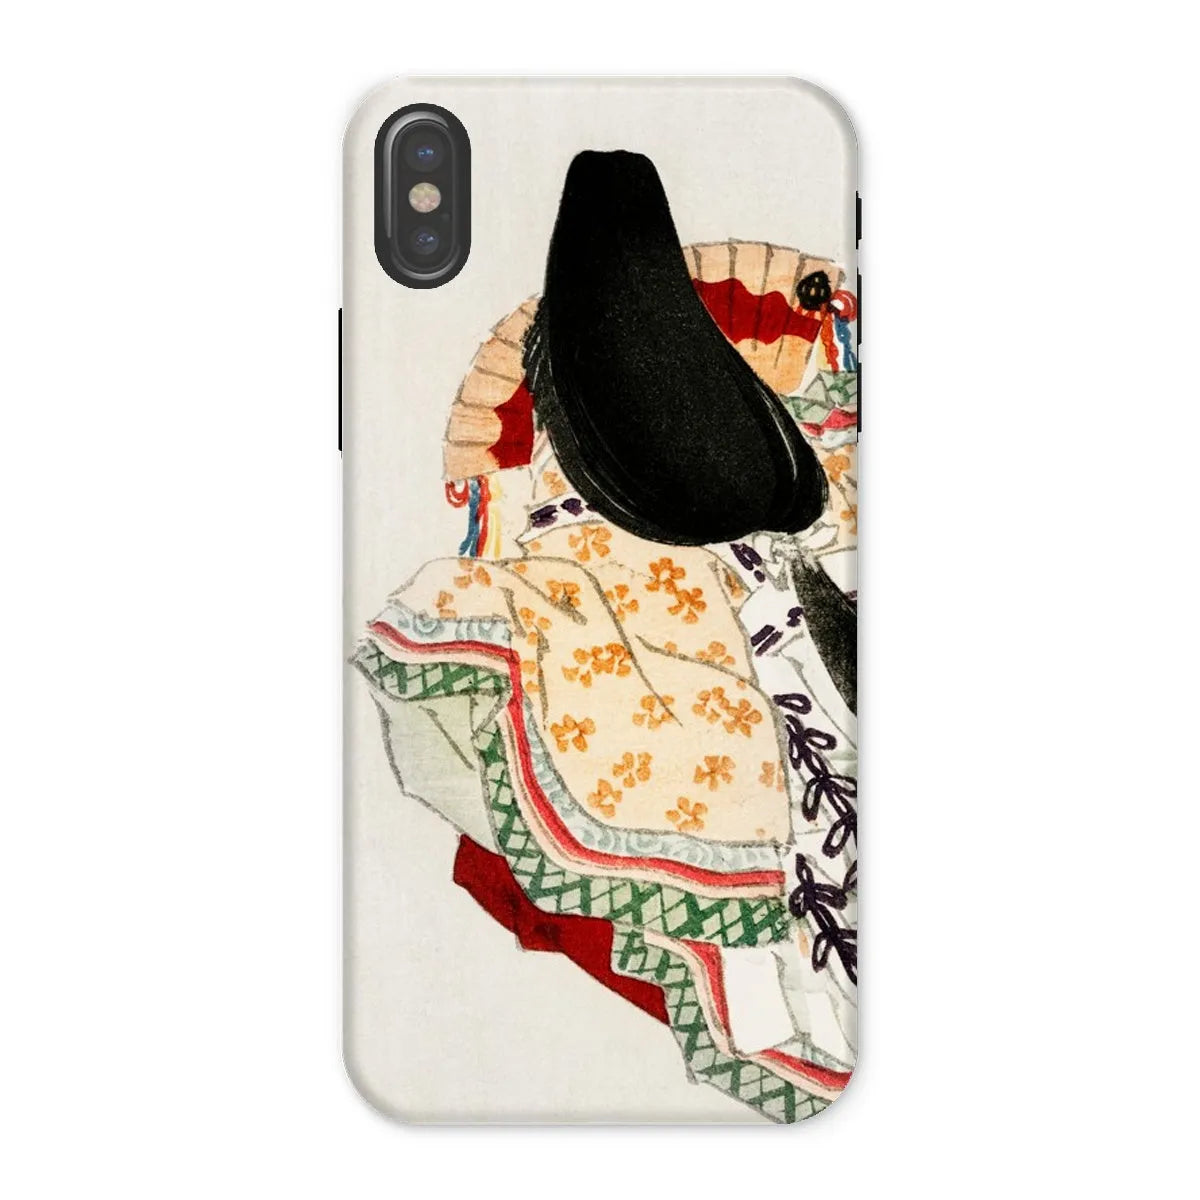 Lady In a Kimono - Meiji Art Phone Case - Kōno Bairei - Iphone x / Matte - Mobile Phone Cases - Aesthetic Art